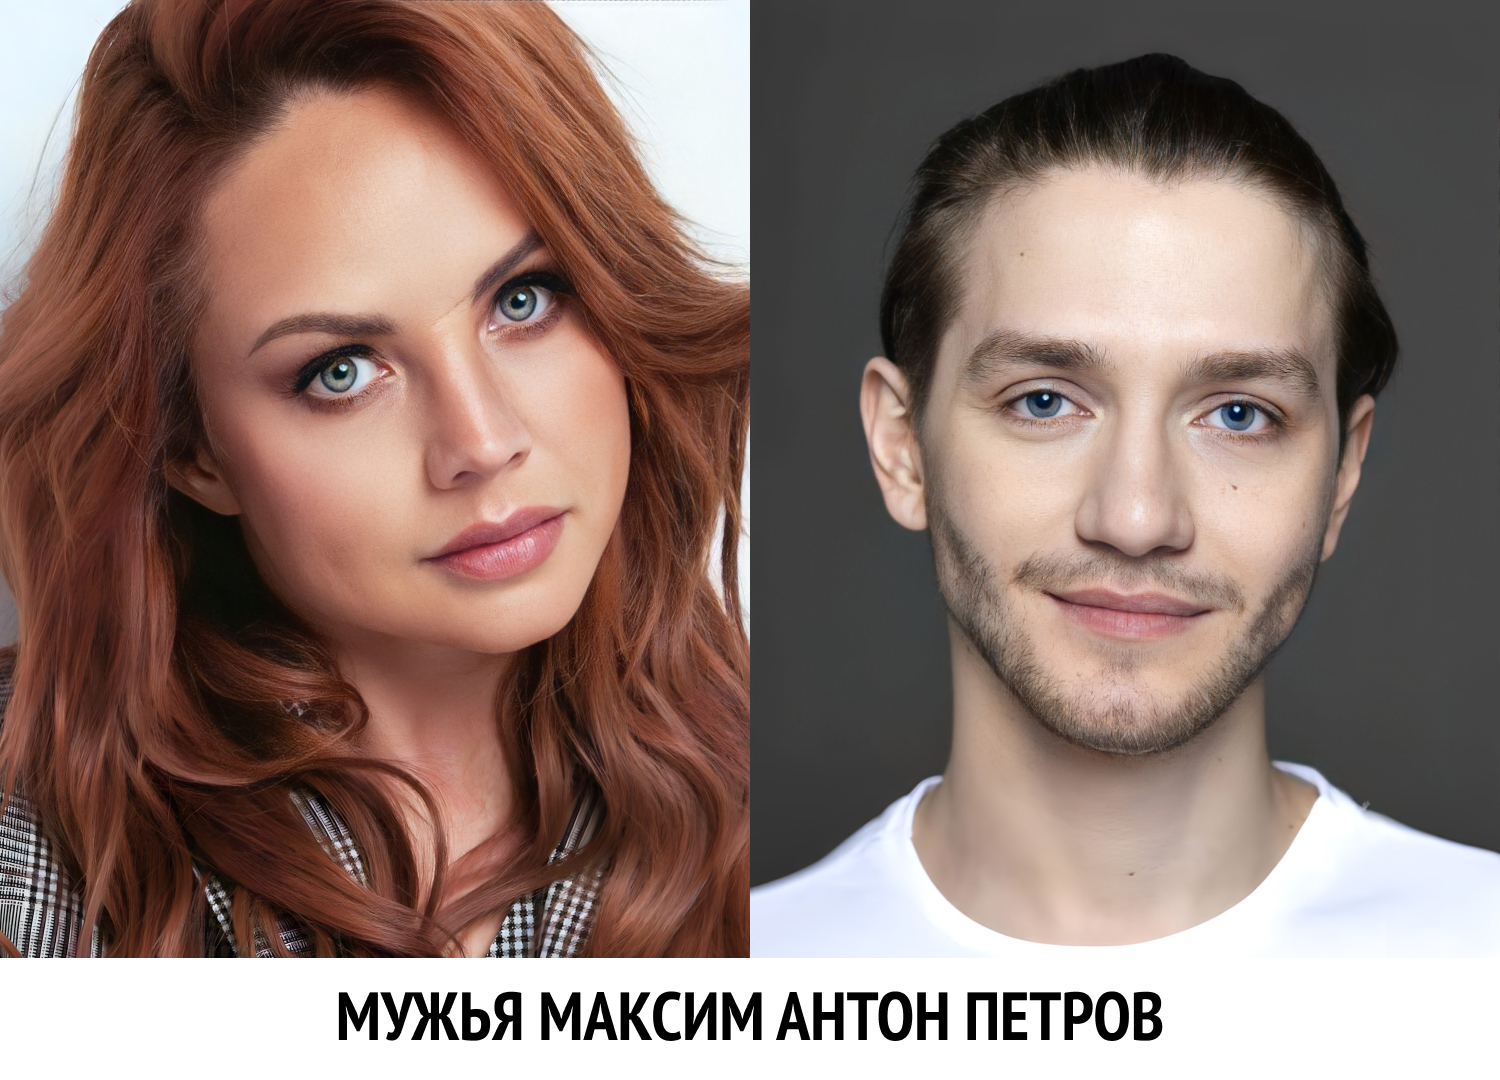 muzhya-Maksim-anton-petrov (15).jpg